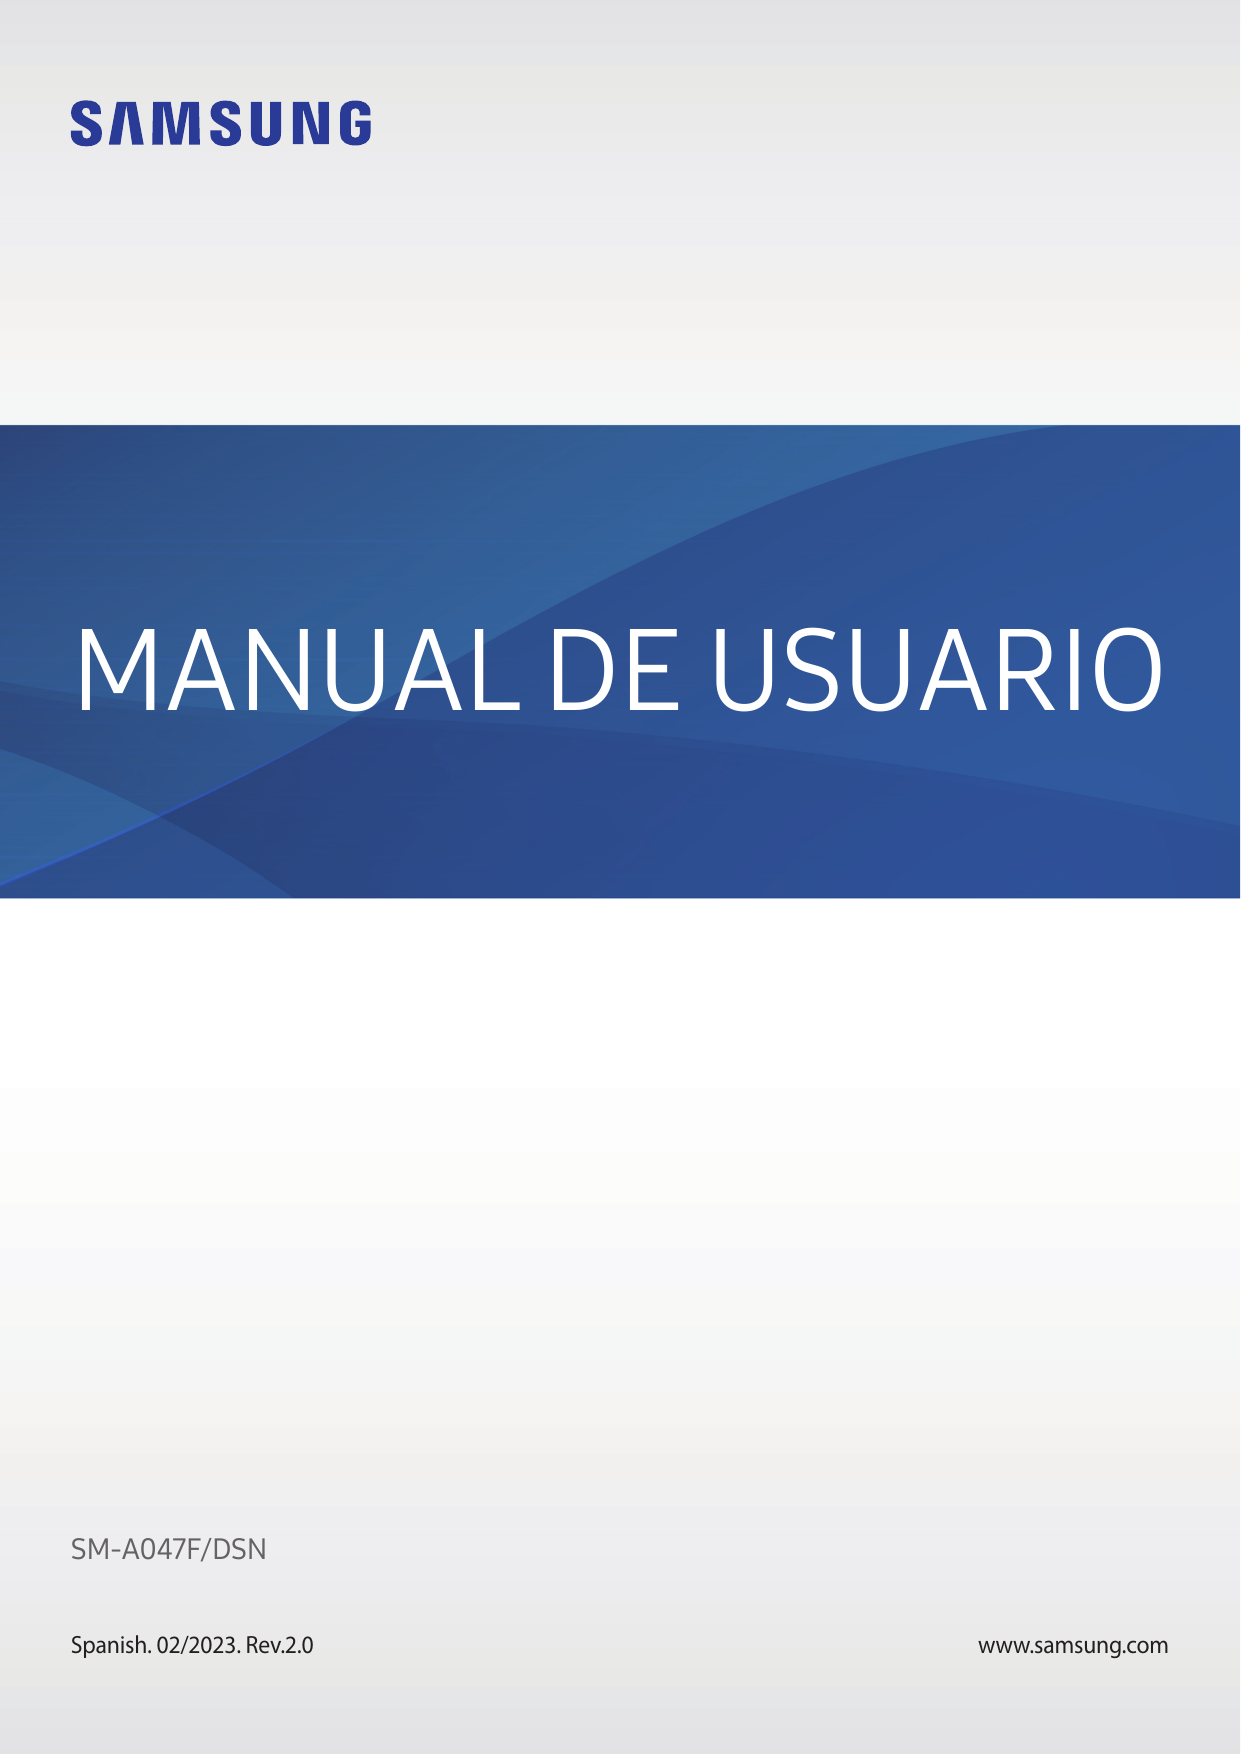 MANUAL DE USUARIOSM-A047F/DSNSpanish. 02/2023. Rev.2.0www.samsung.com